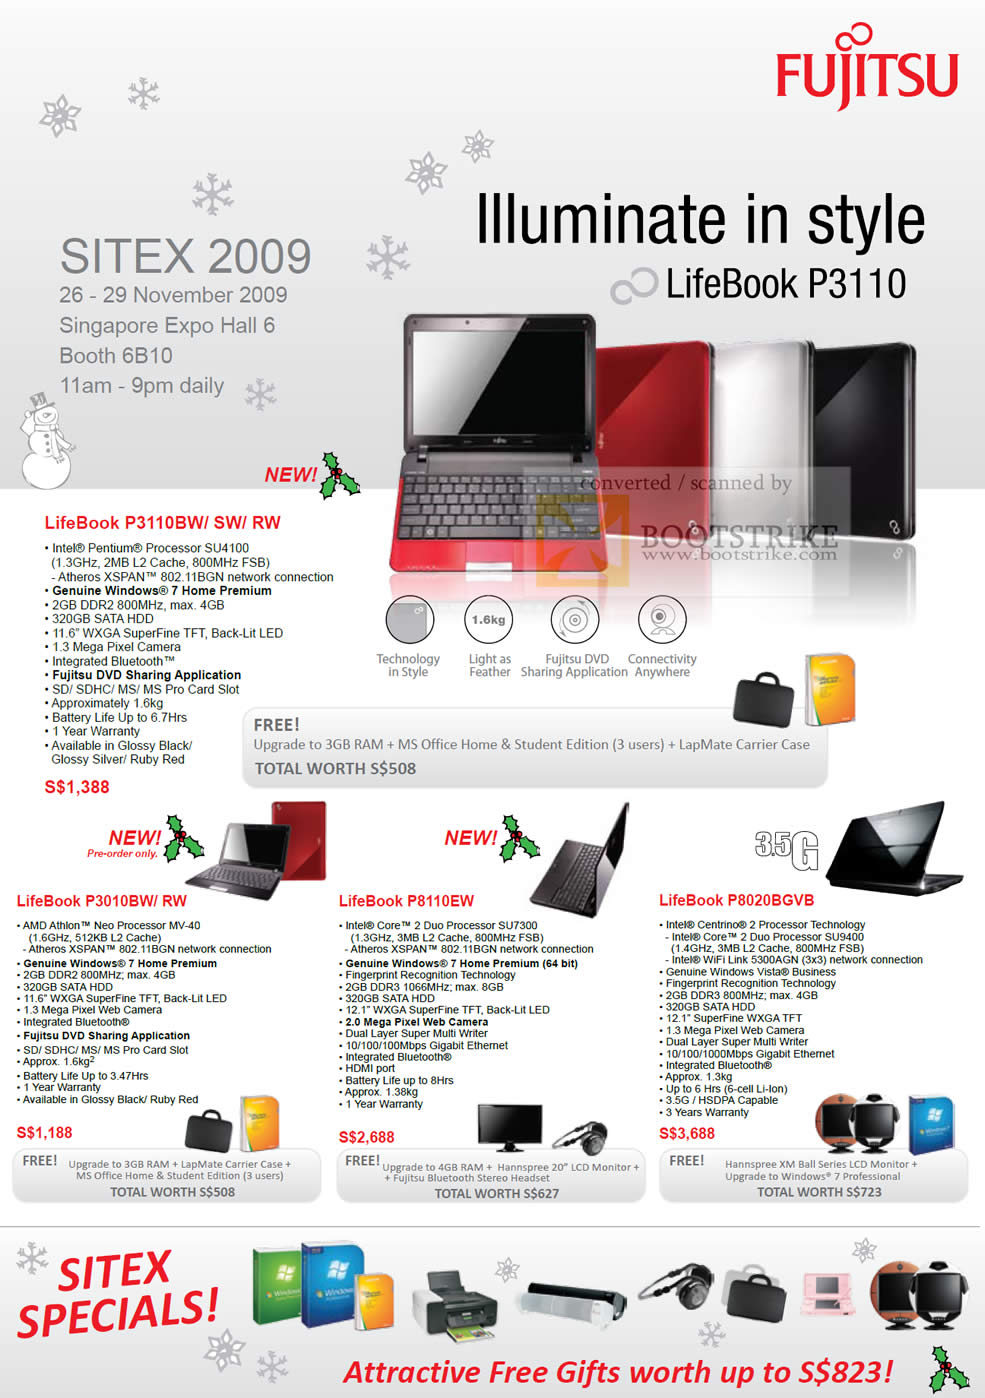 Sitex 2009 price list image brochure of Fujitsu Lifebook P3110 BW SW RW P3010 P8110 P8020 Notebooks